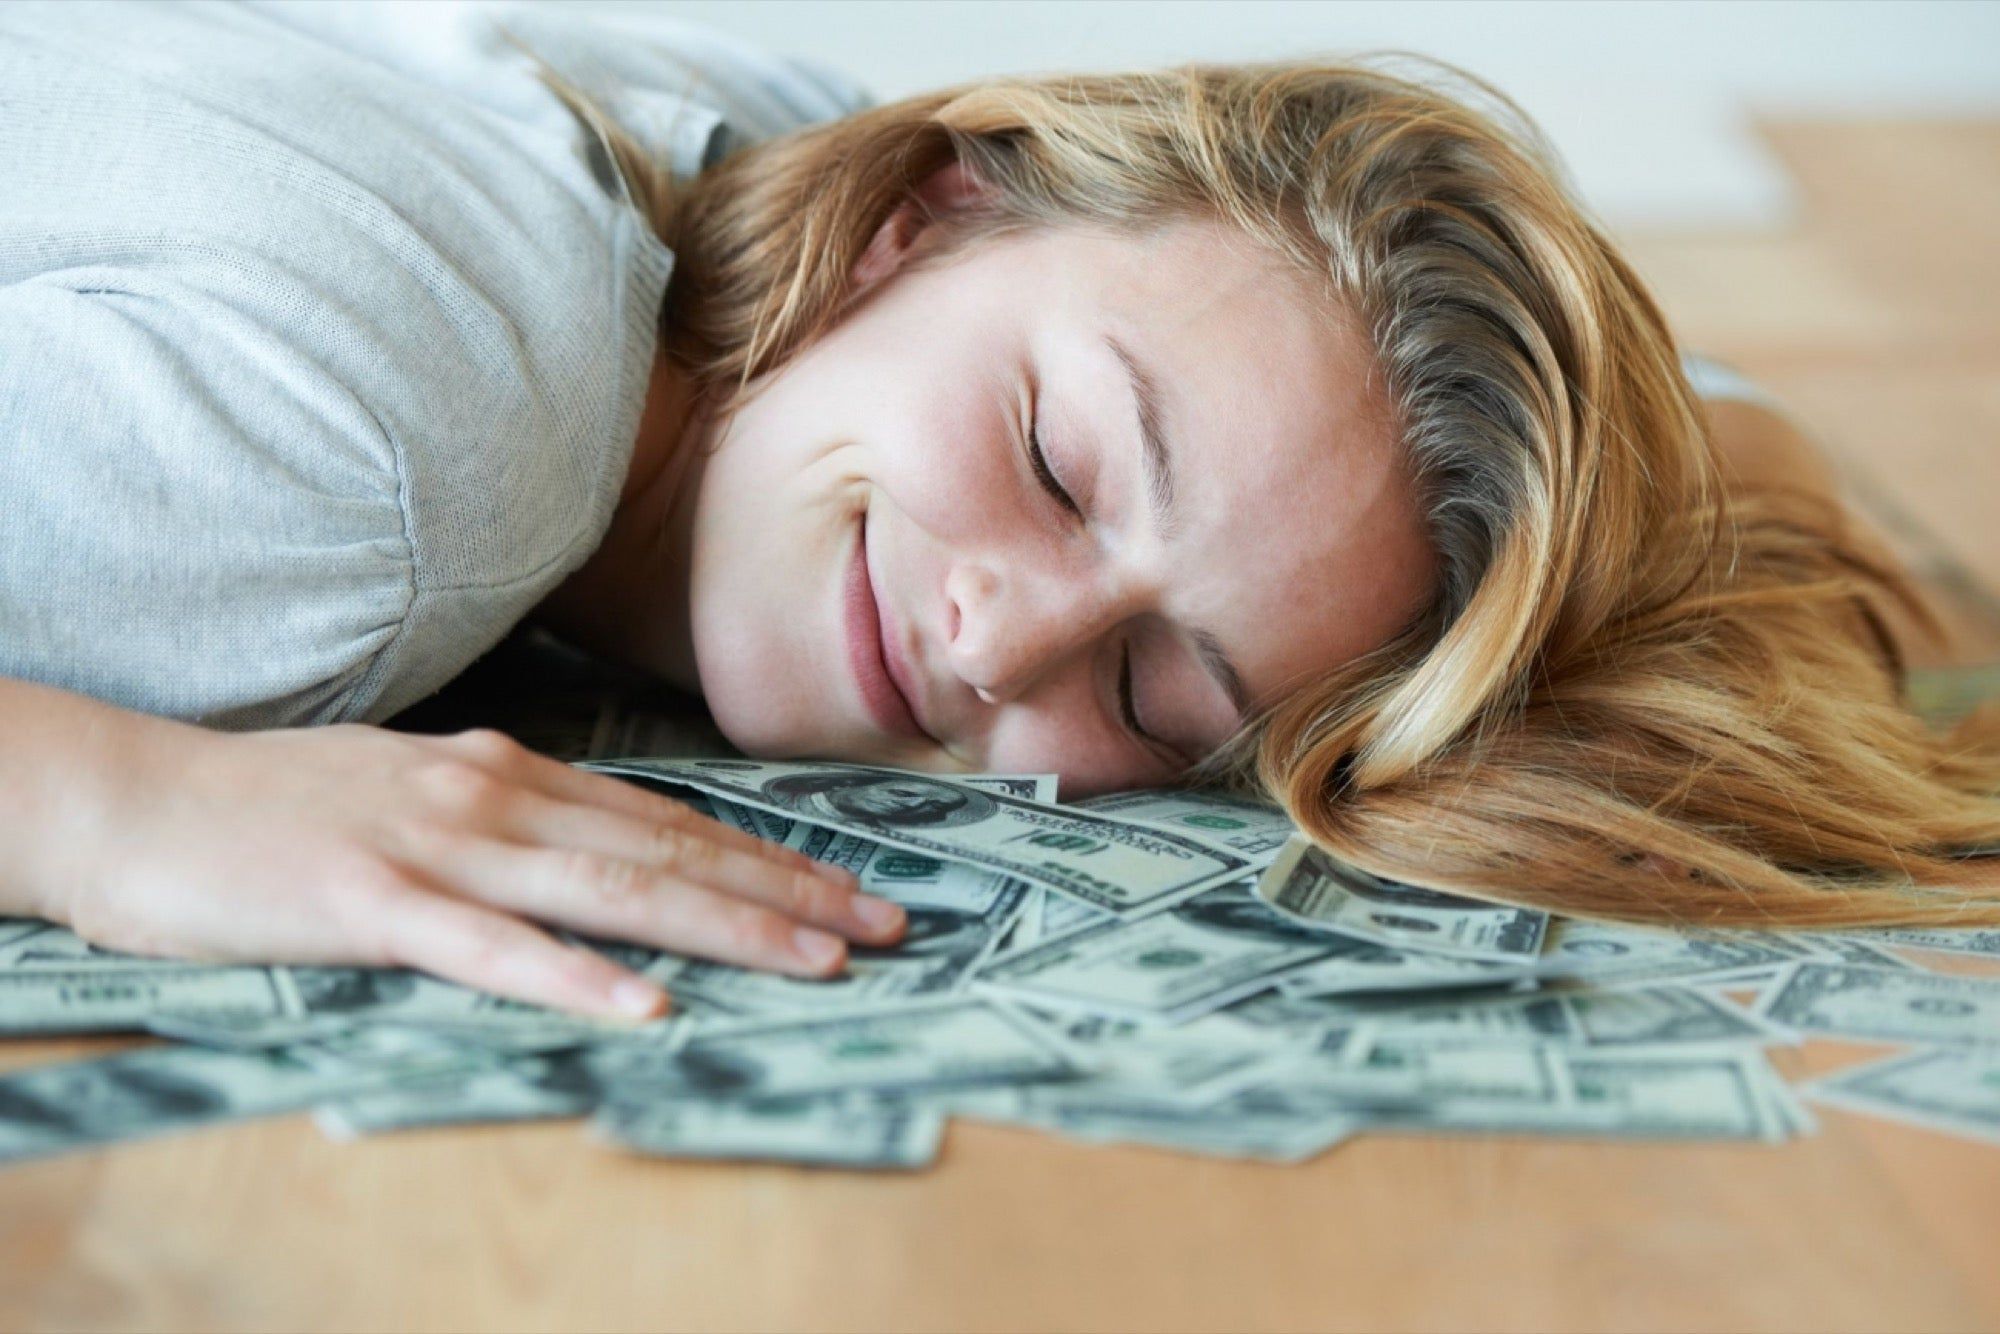 Top 3 Valuable & Useful Tips To Make Money While You Sleep